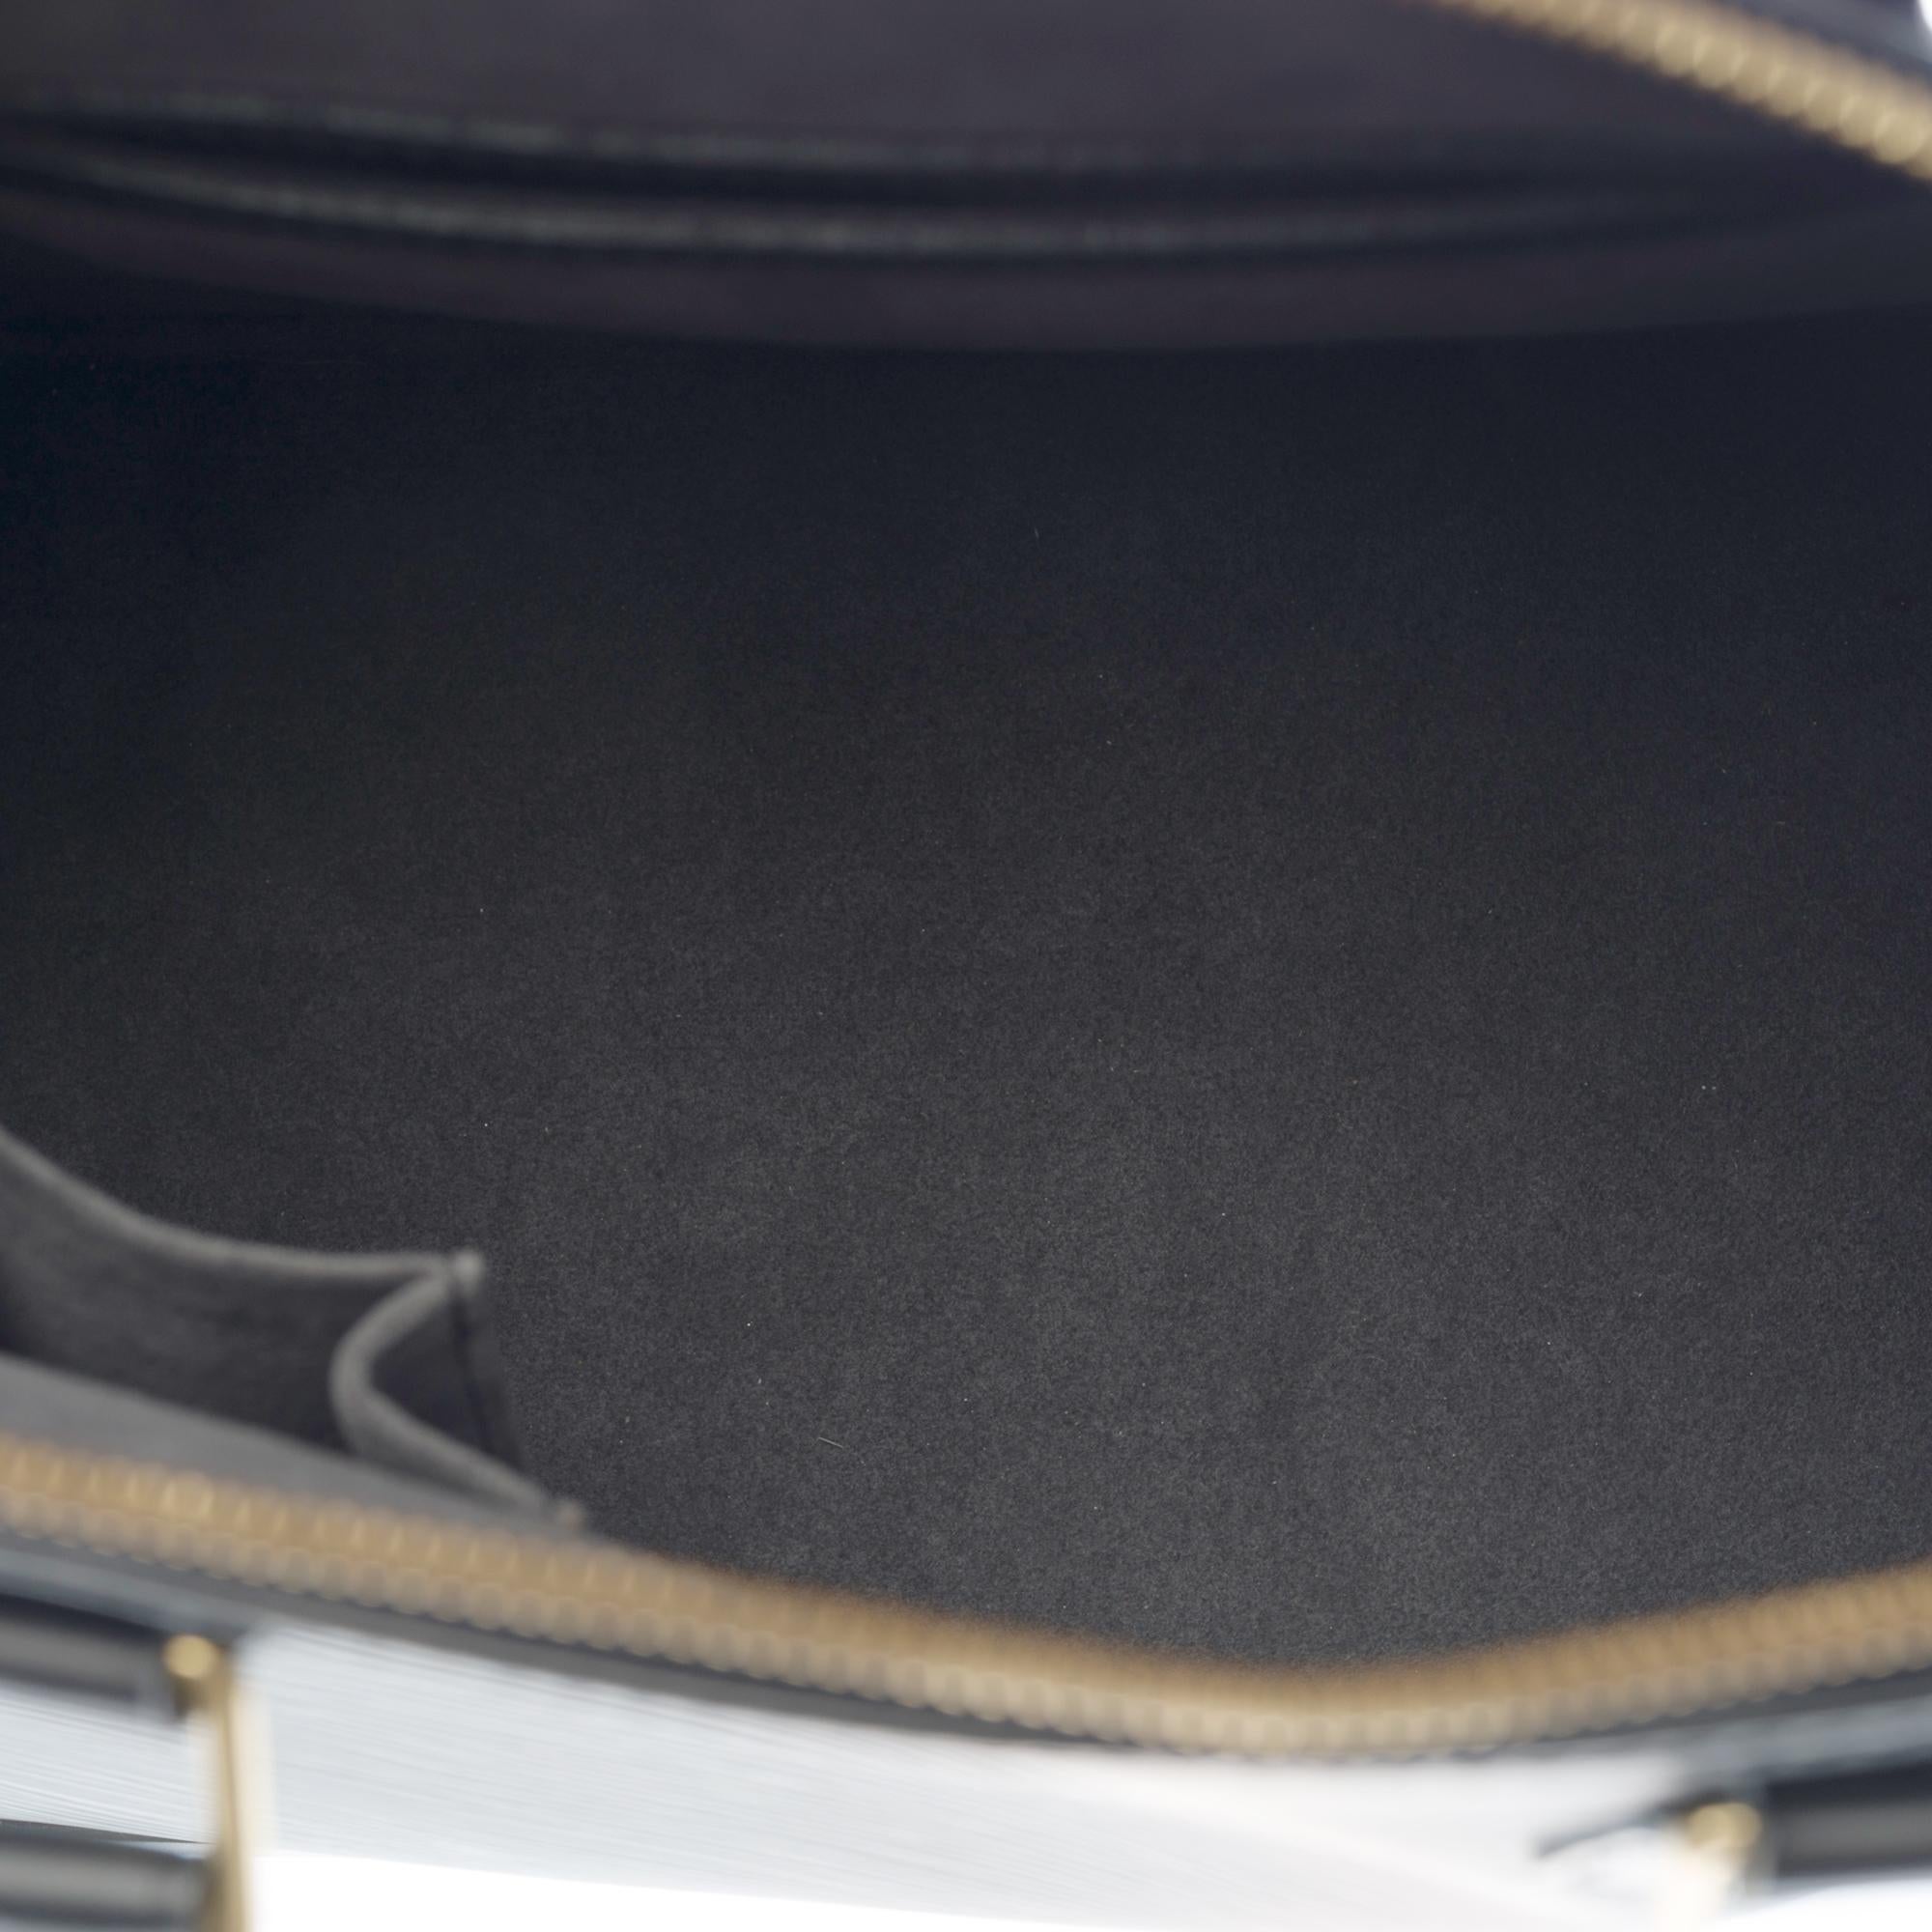 Louis Vuitton Alma handbag in black epi leather, GHW 2